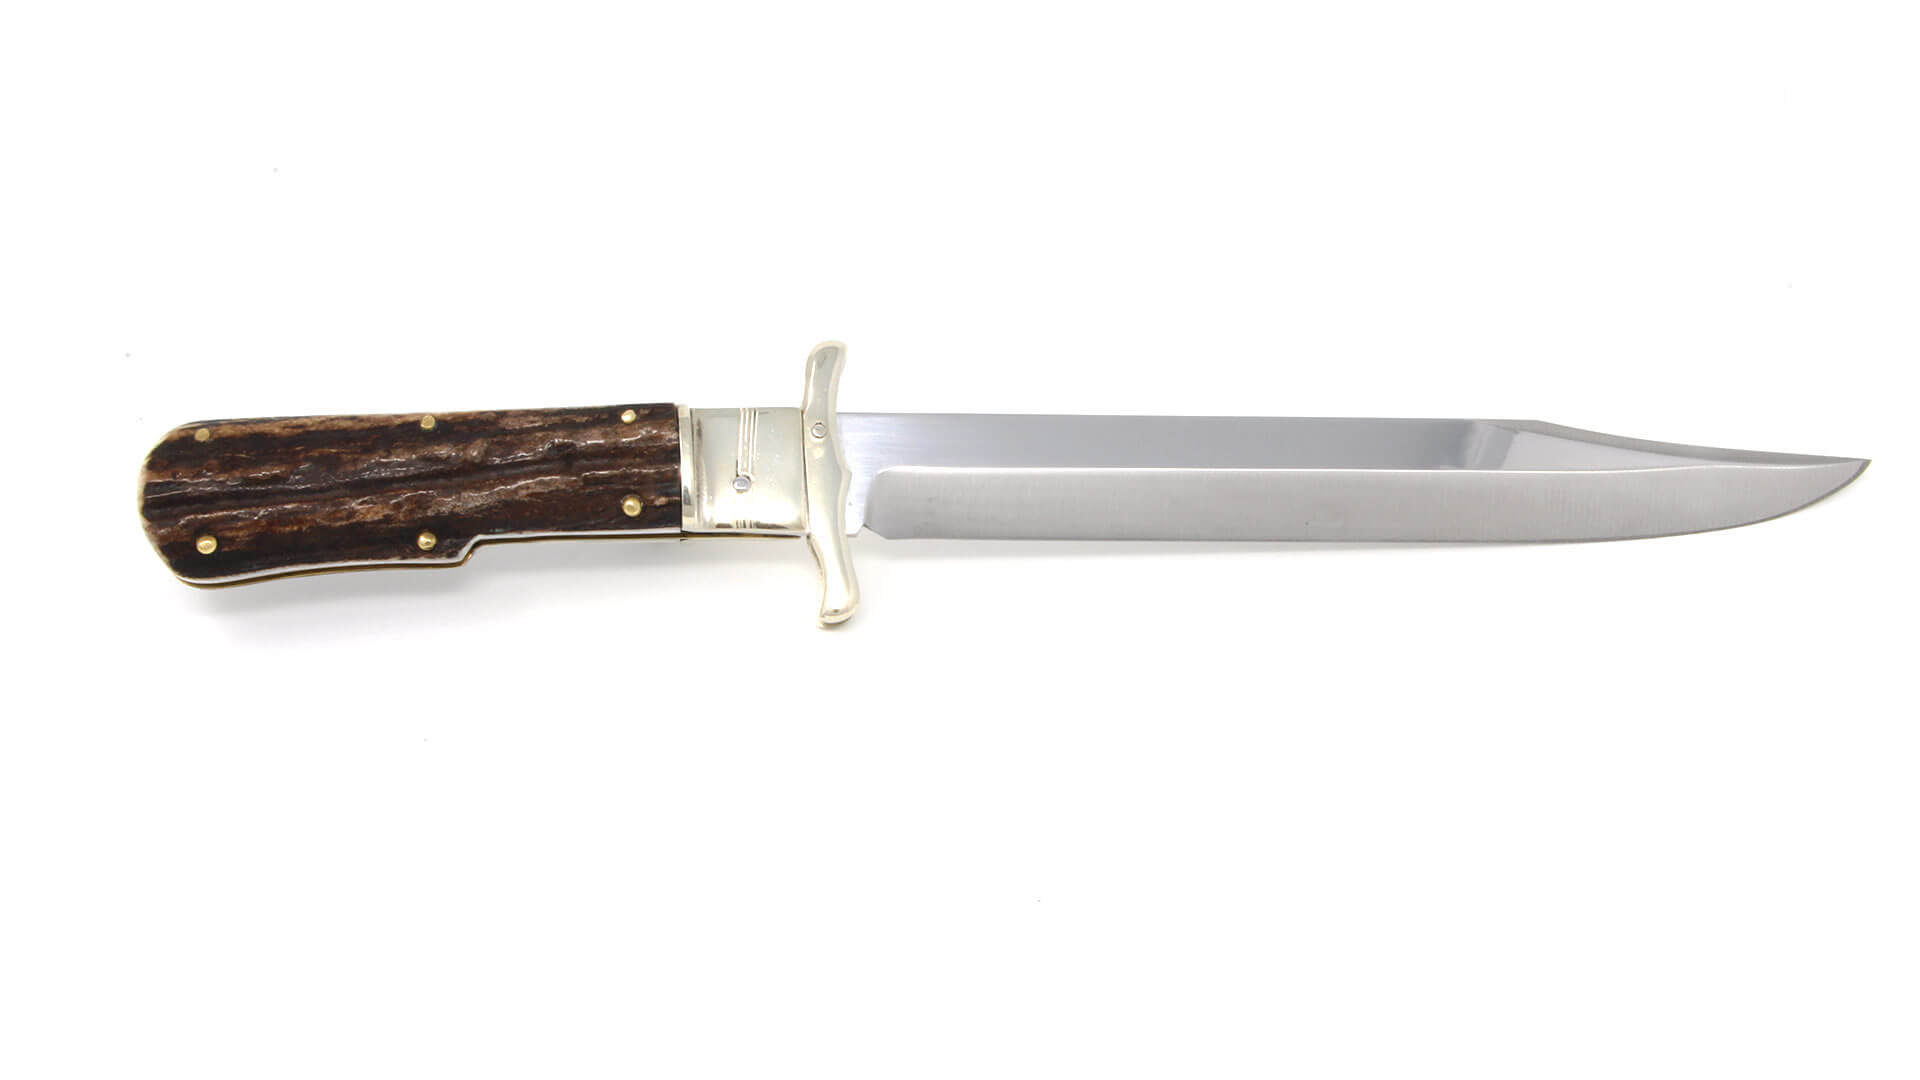 Buy Hubertus Saufänger extension knife from Solingen